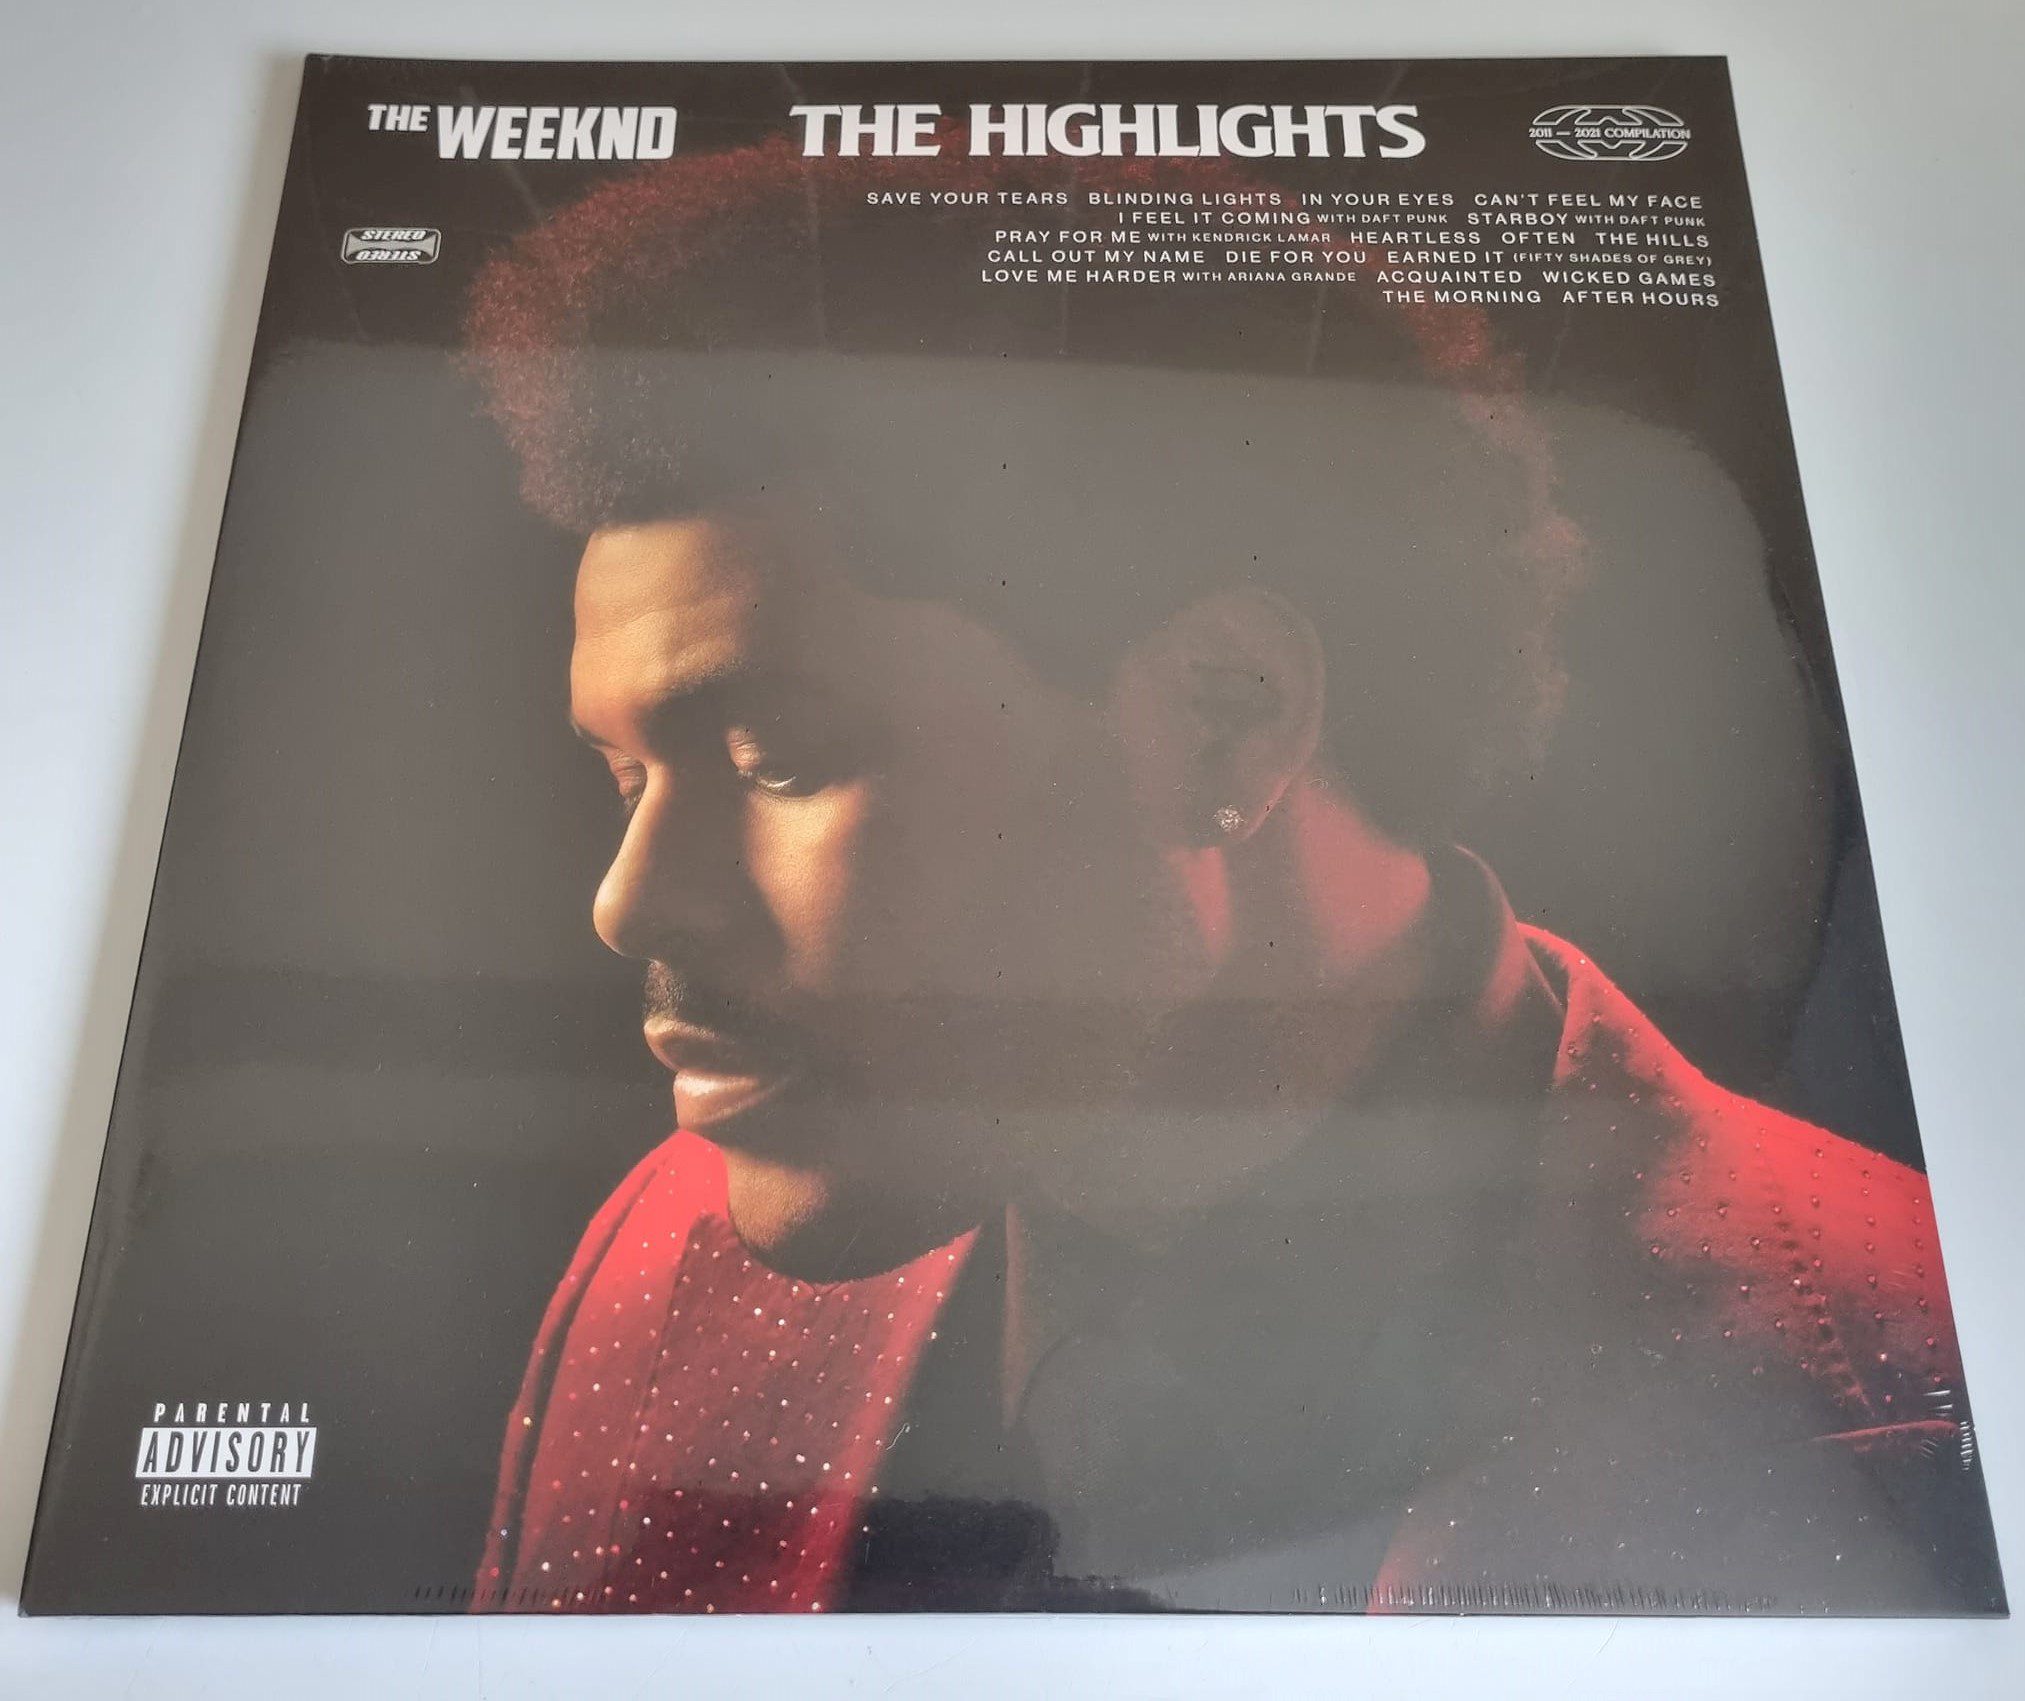 The Weeknd The Highlights Vinyl Record (Explici t Lyrics) 